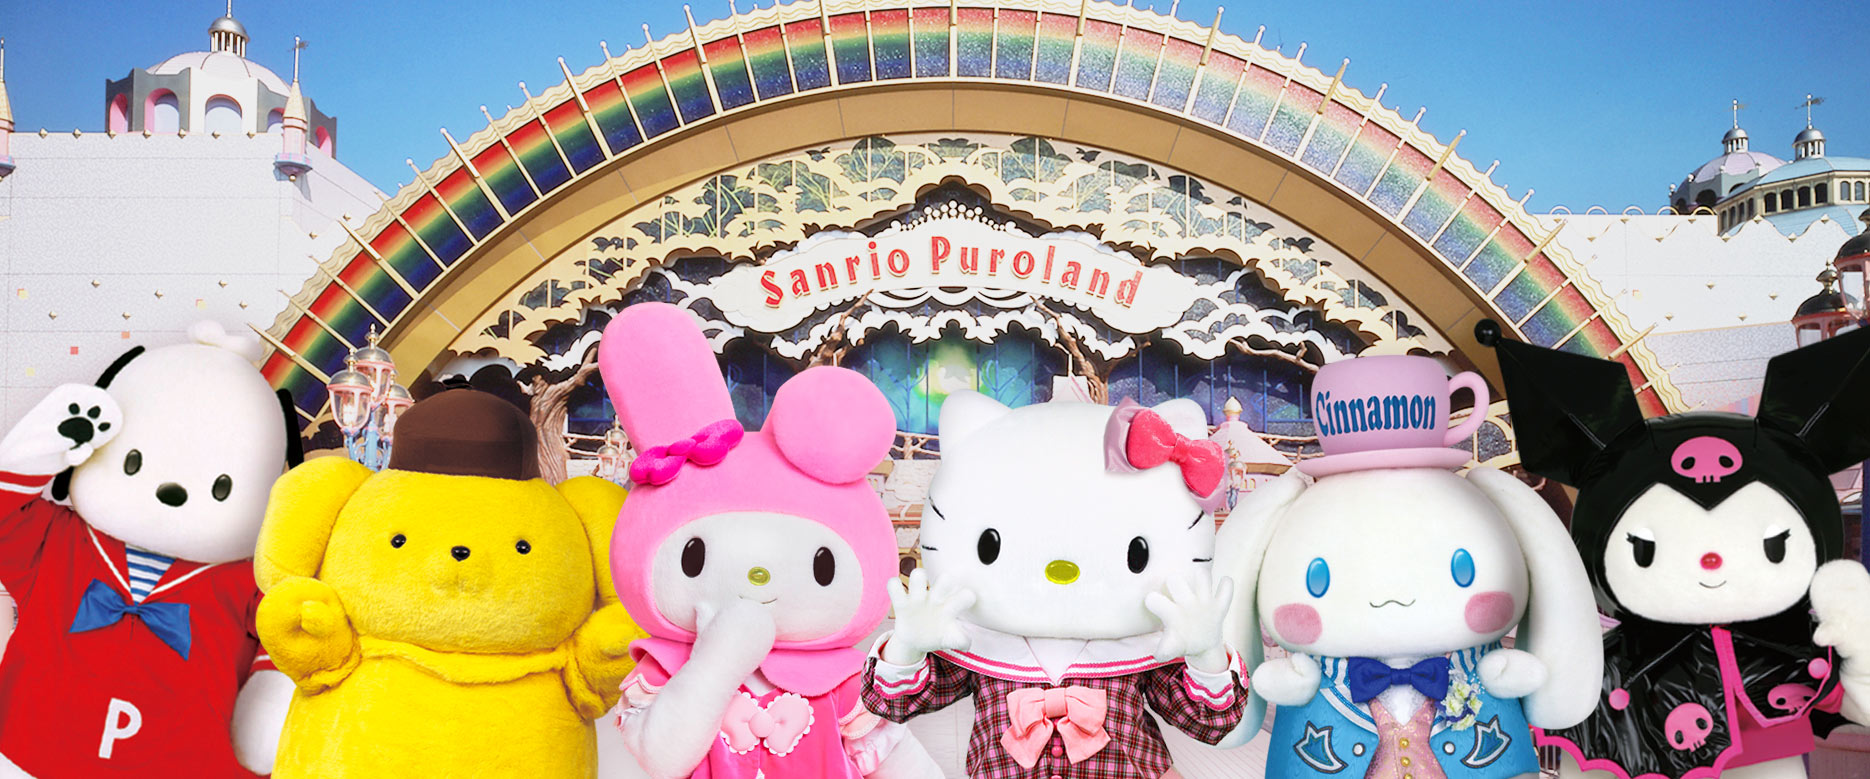 Sanrio Puroland: Hello Kitty Theme Park in Tokyo!